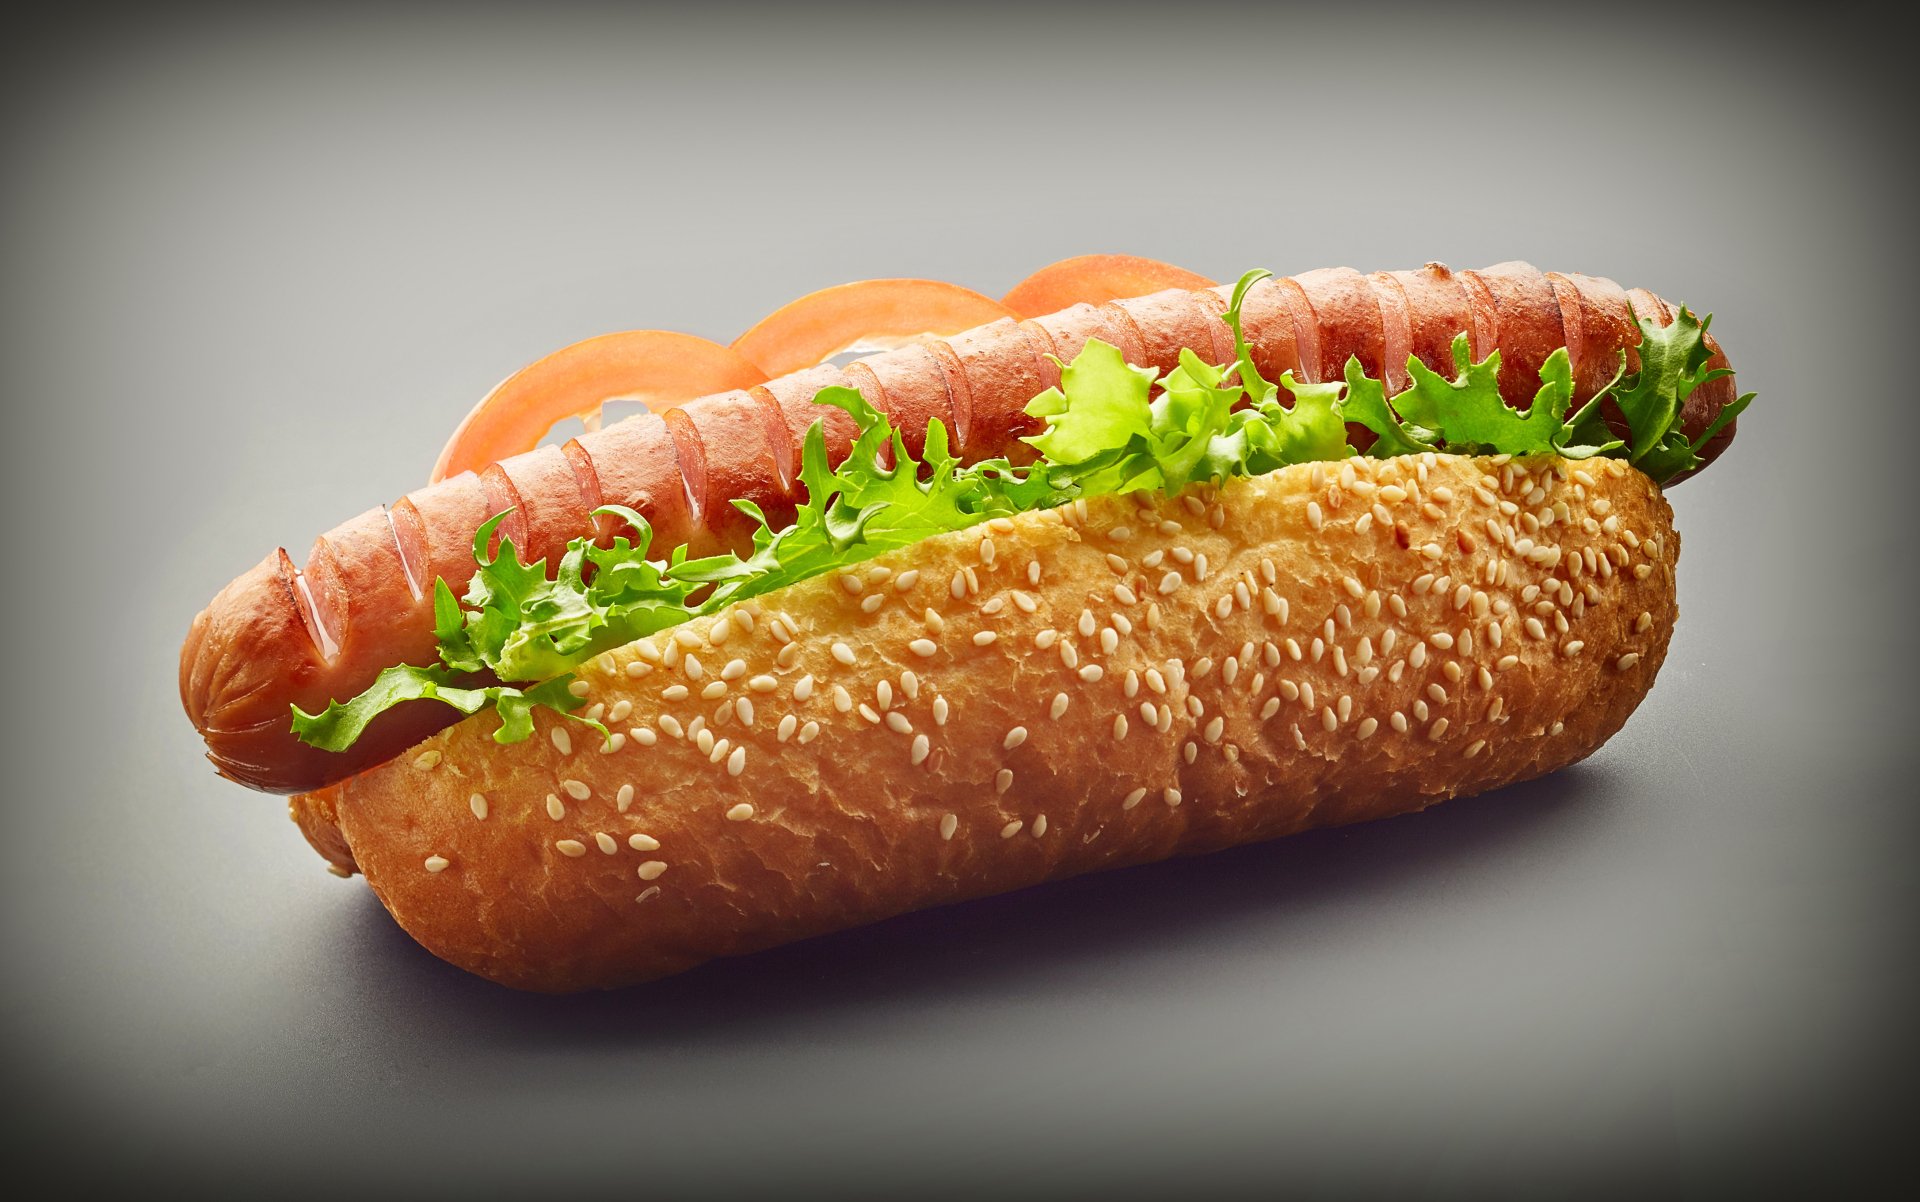 Food Hot Dog 4k Ultra HD Wallpaper